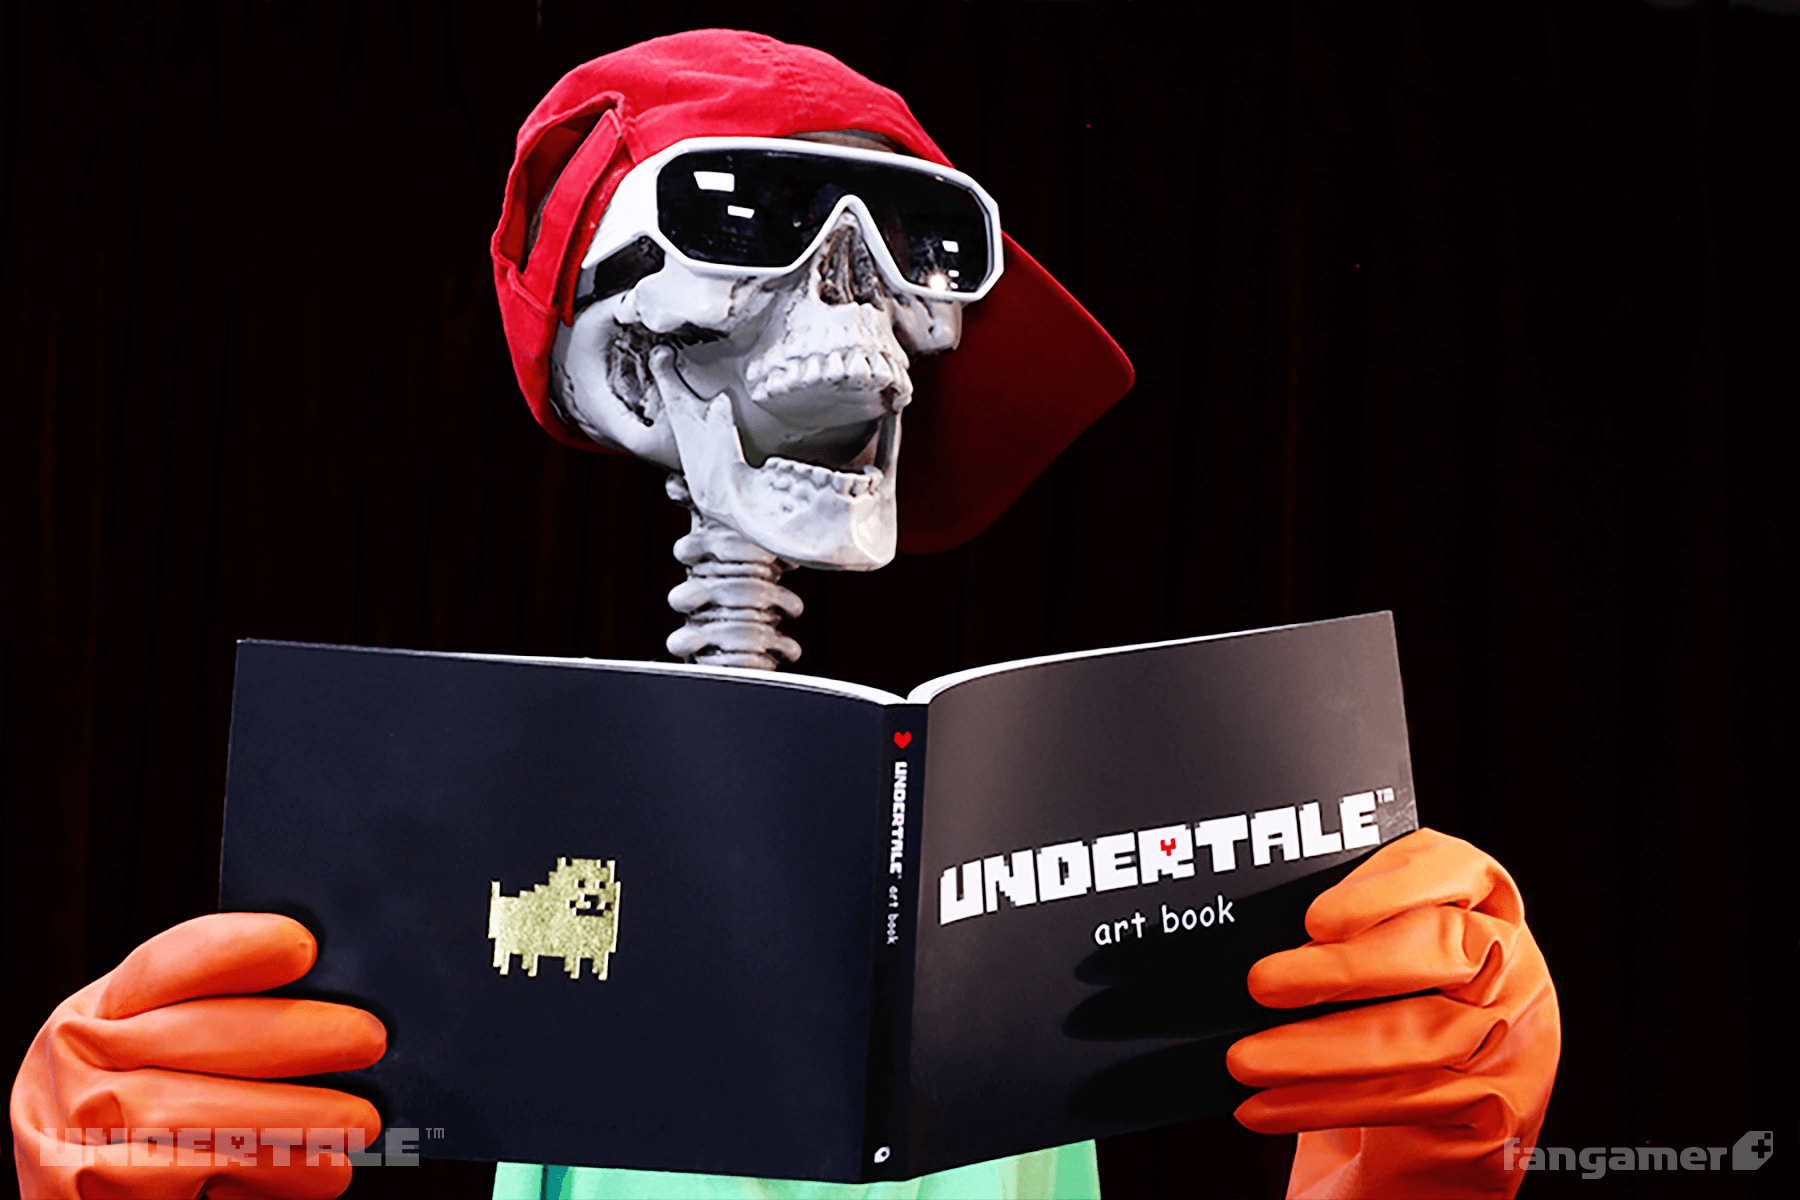 UnderTale Comics! - Free stories online. Create books for kids